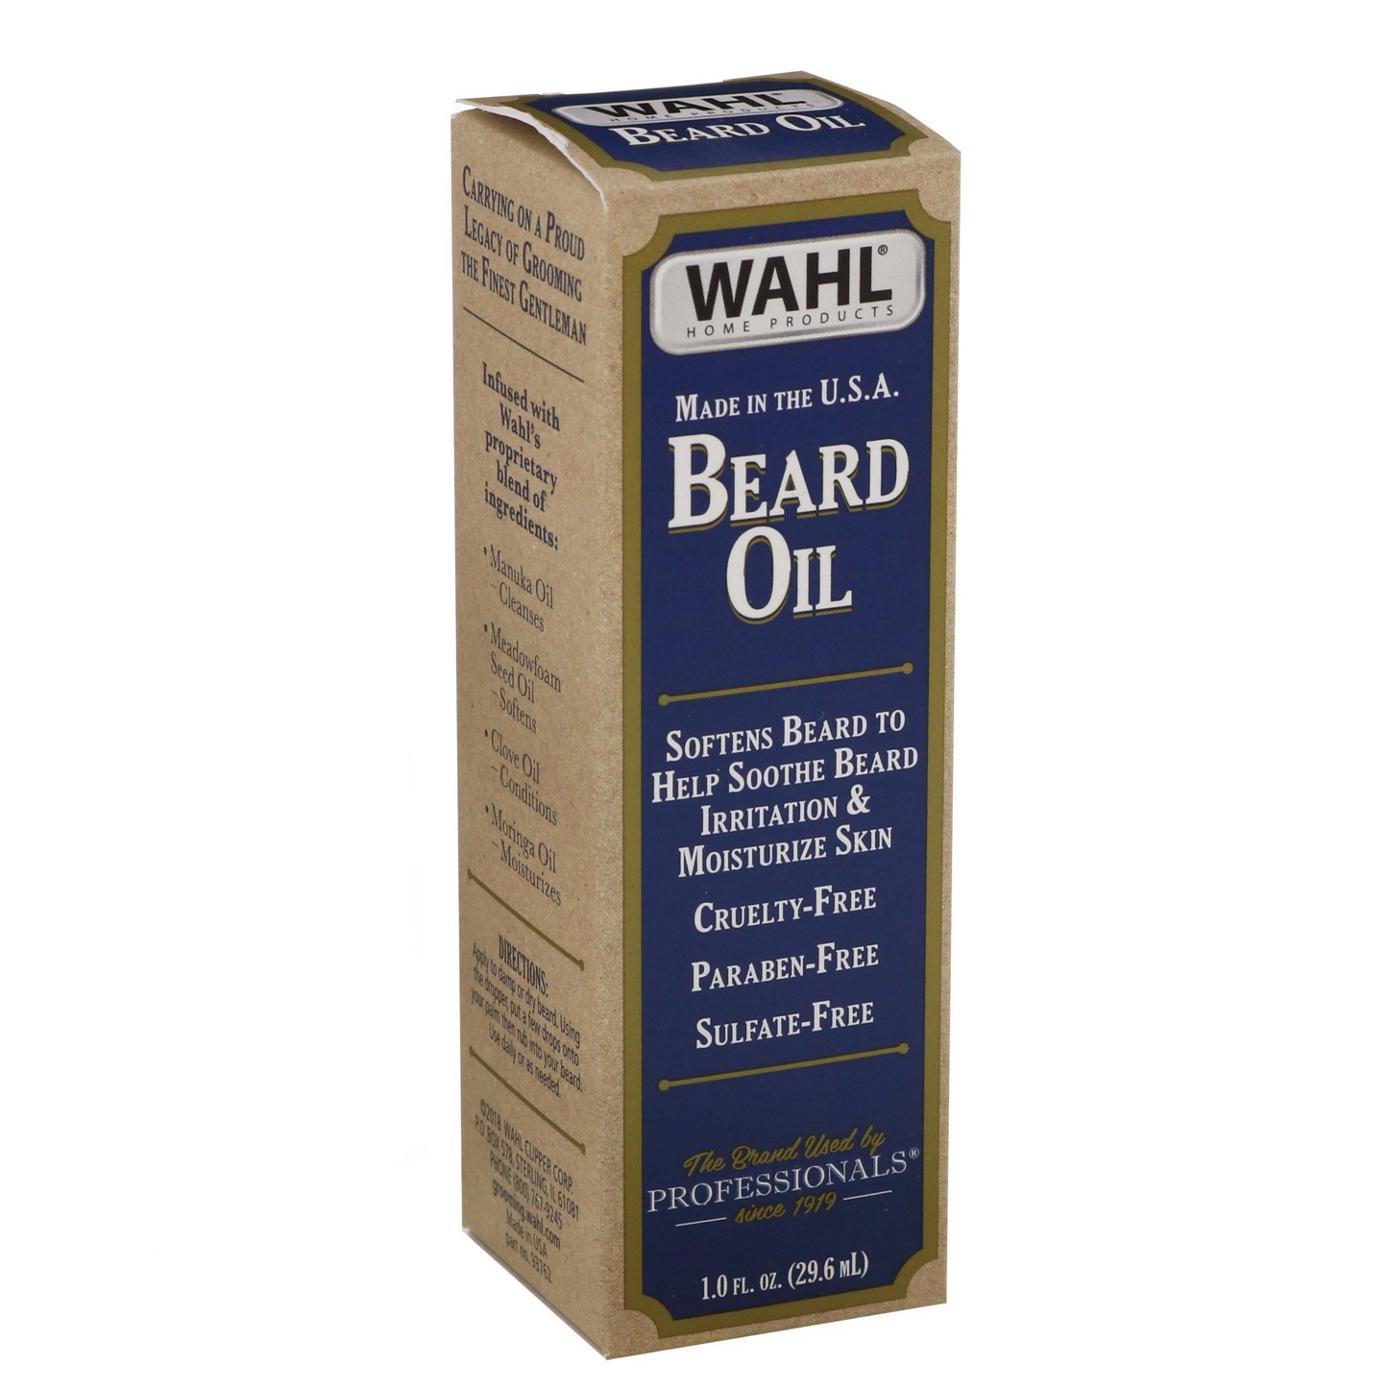 Wahl Beard Oil - Shop Beard Care at H-E-B